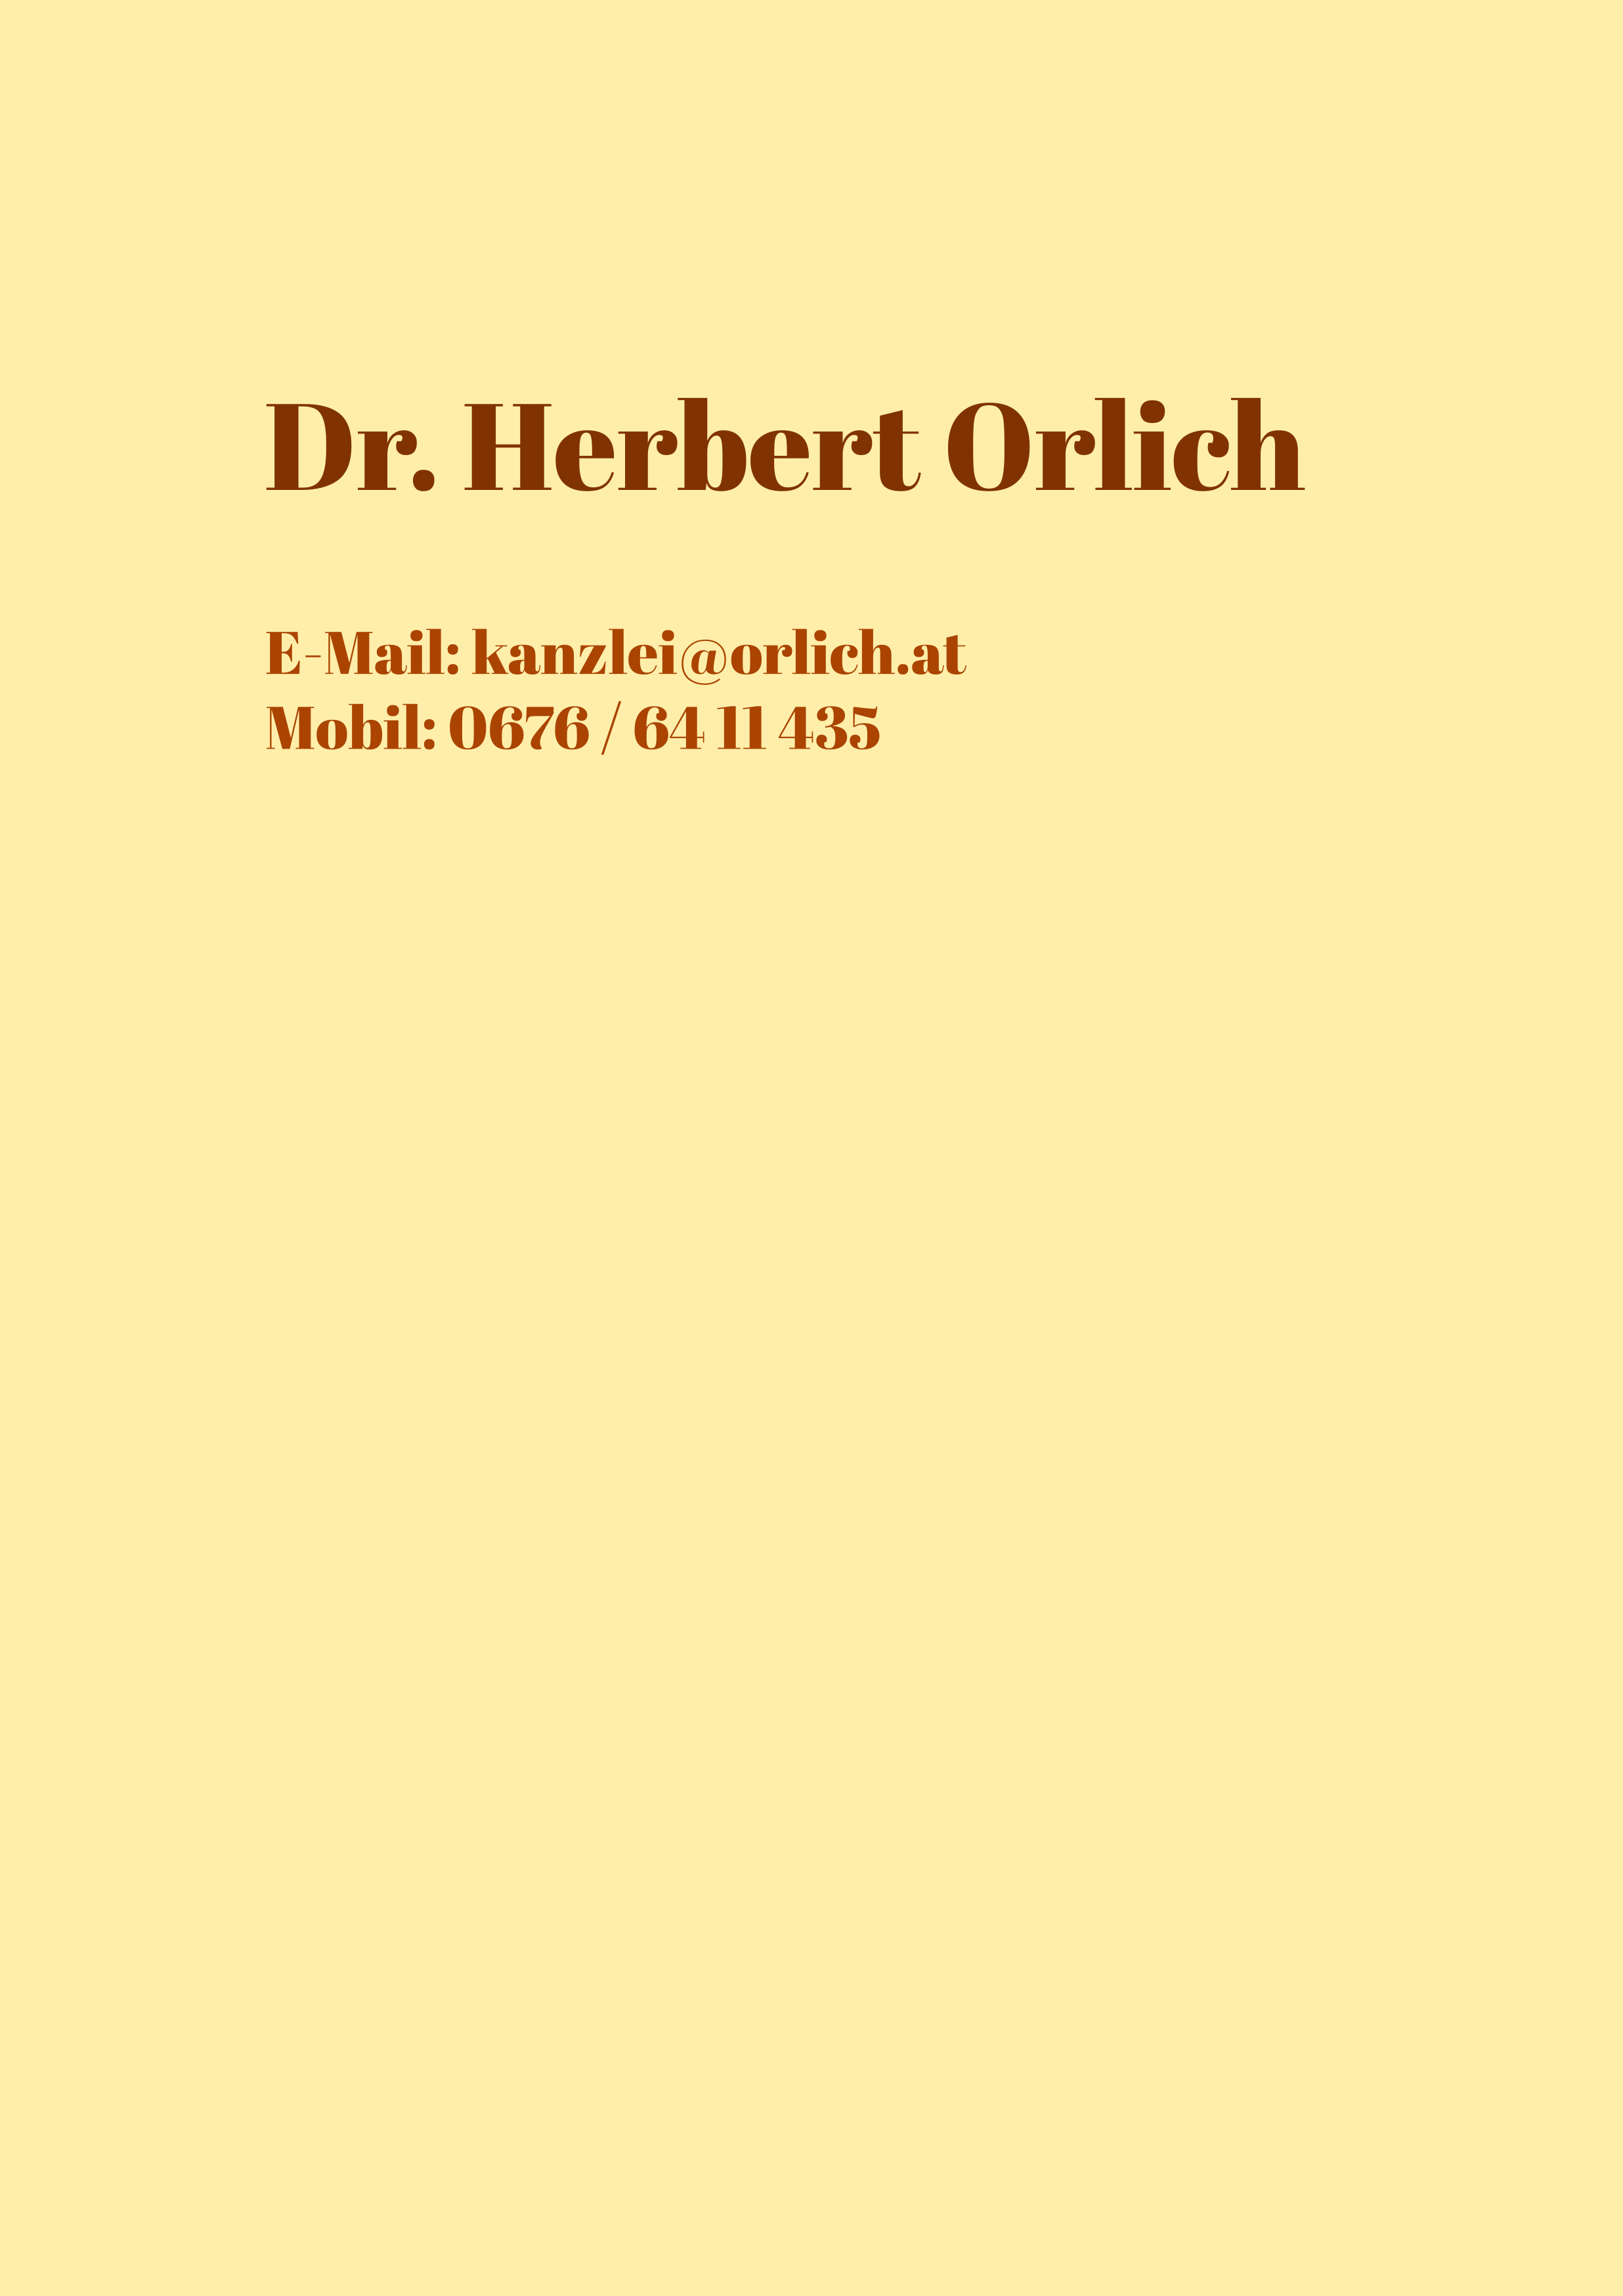 Dr. Herbert Orlich